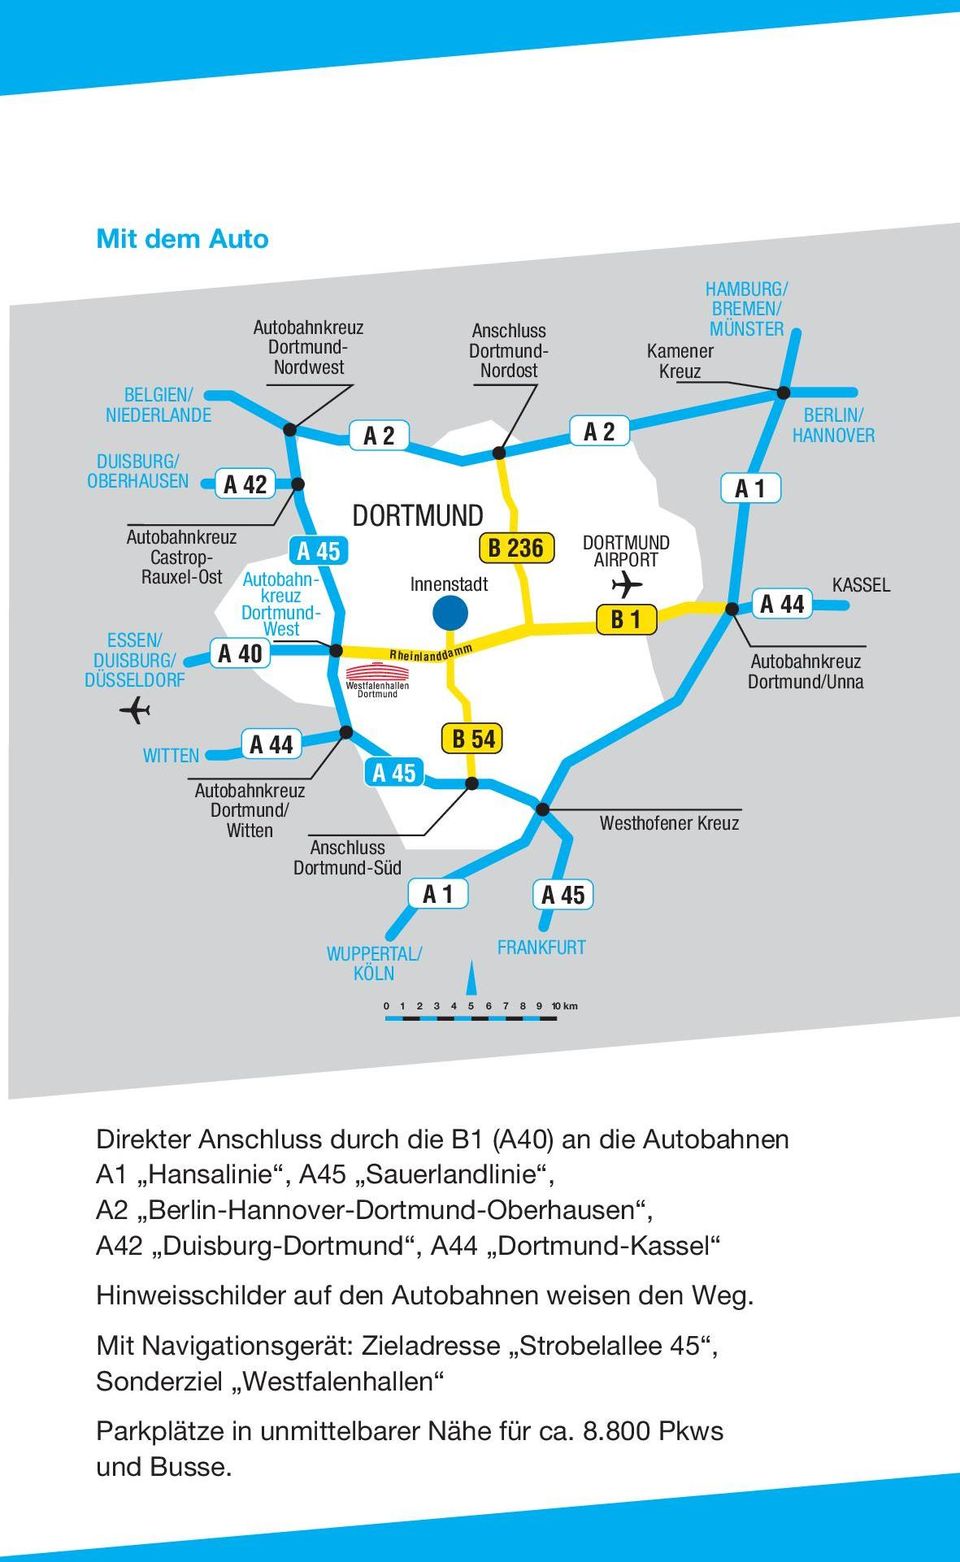 B 54 WITTEN A 45 Autobahnkreuz Dortmund/ Witten Anschluss Dortmund-Süd A 1 WUPPERTAL/ KÖLN A 45 FRANKFURT Westhofener Kreuz 0 1 2 3 4 5 6 7 8 9 10 km Direkter Anschluss durch die B1 (A40) an die